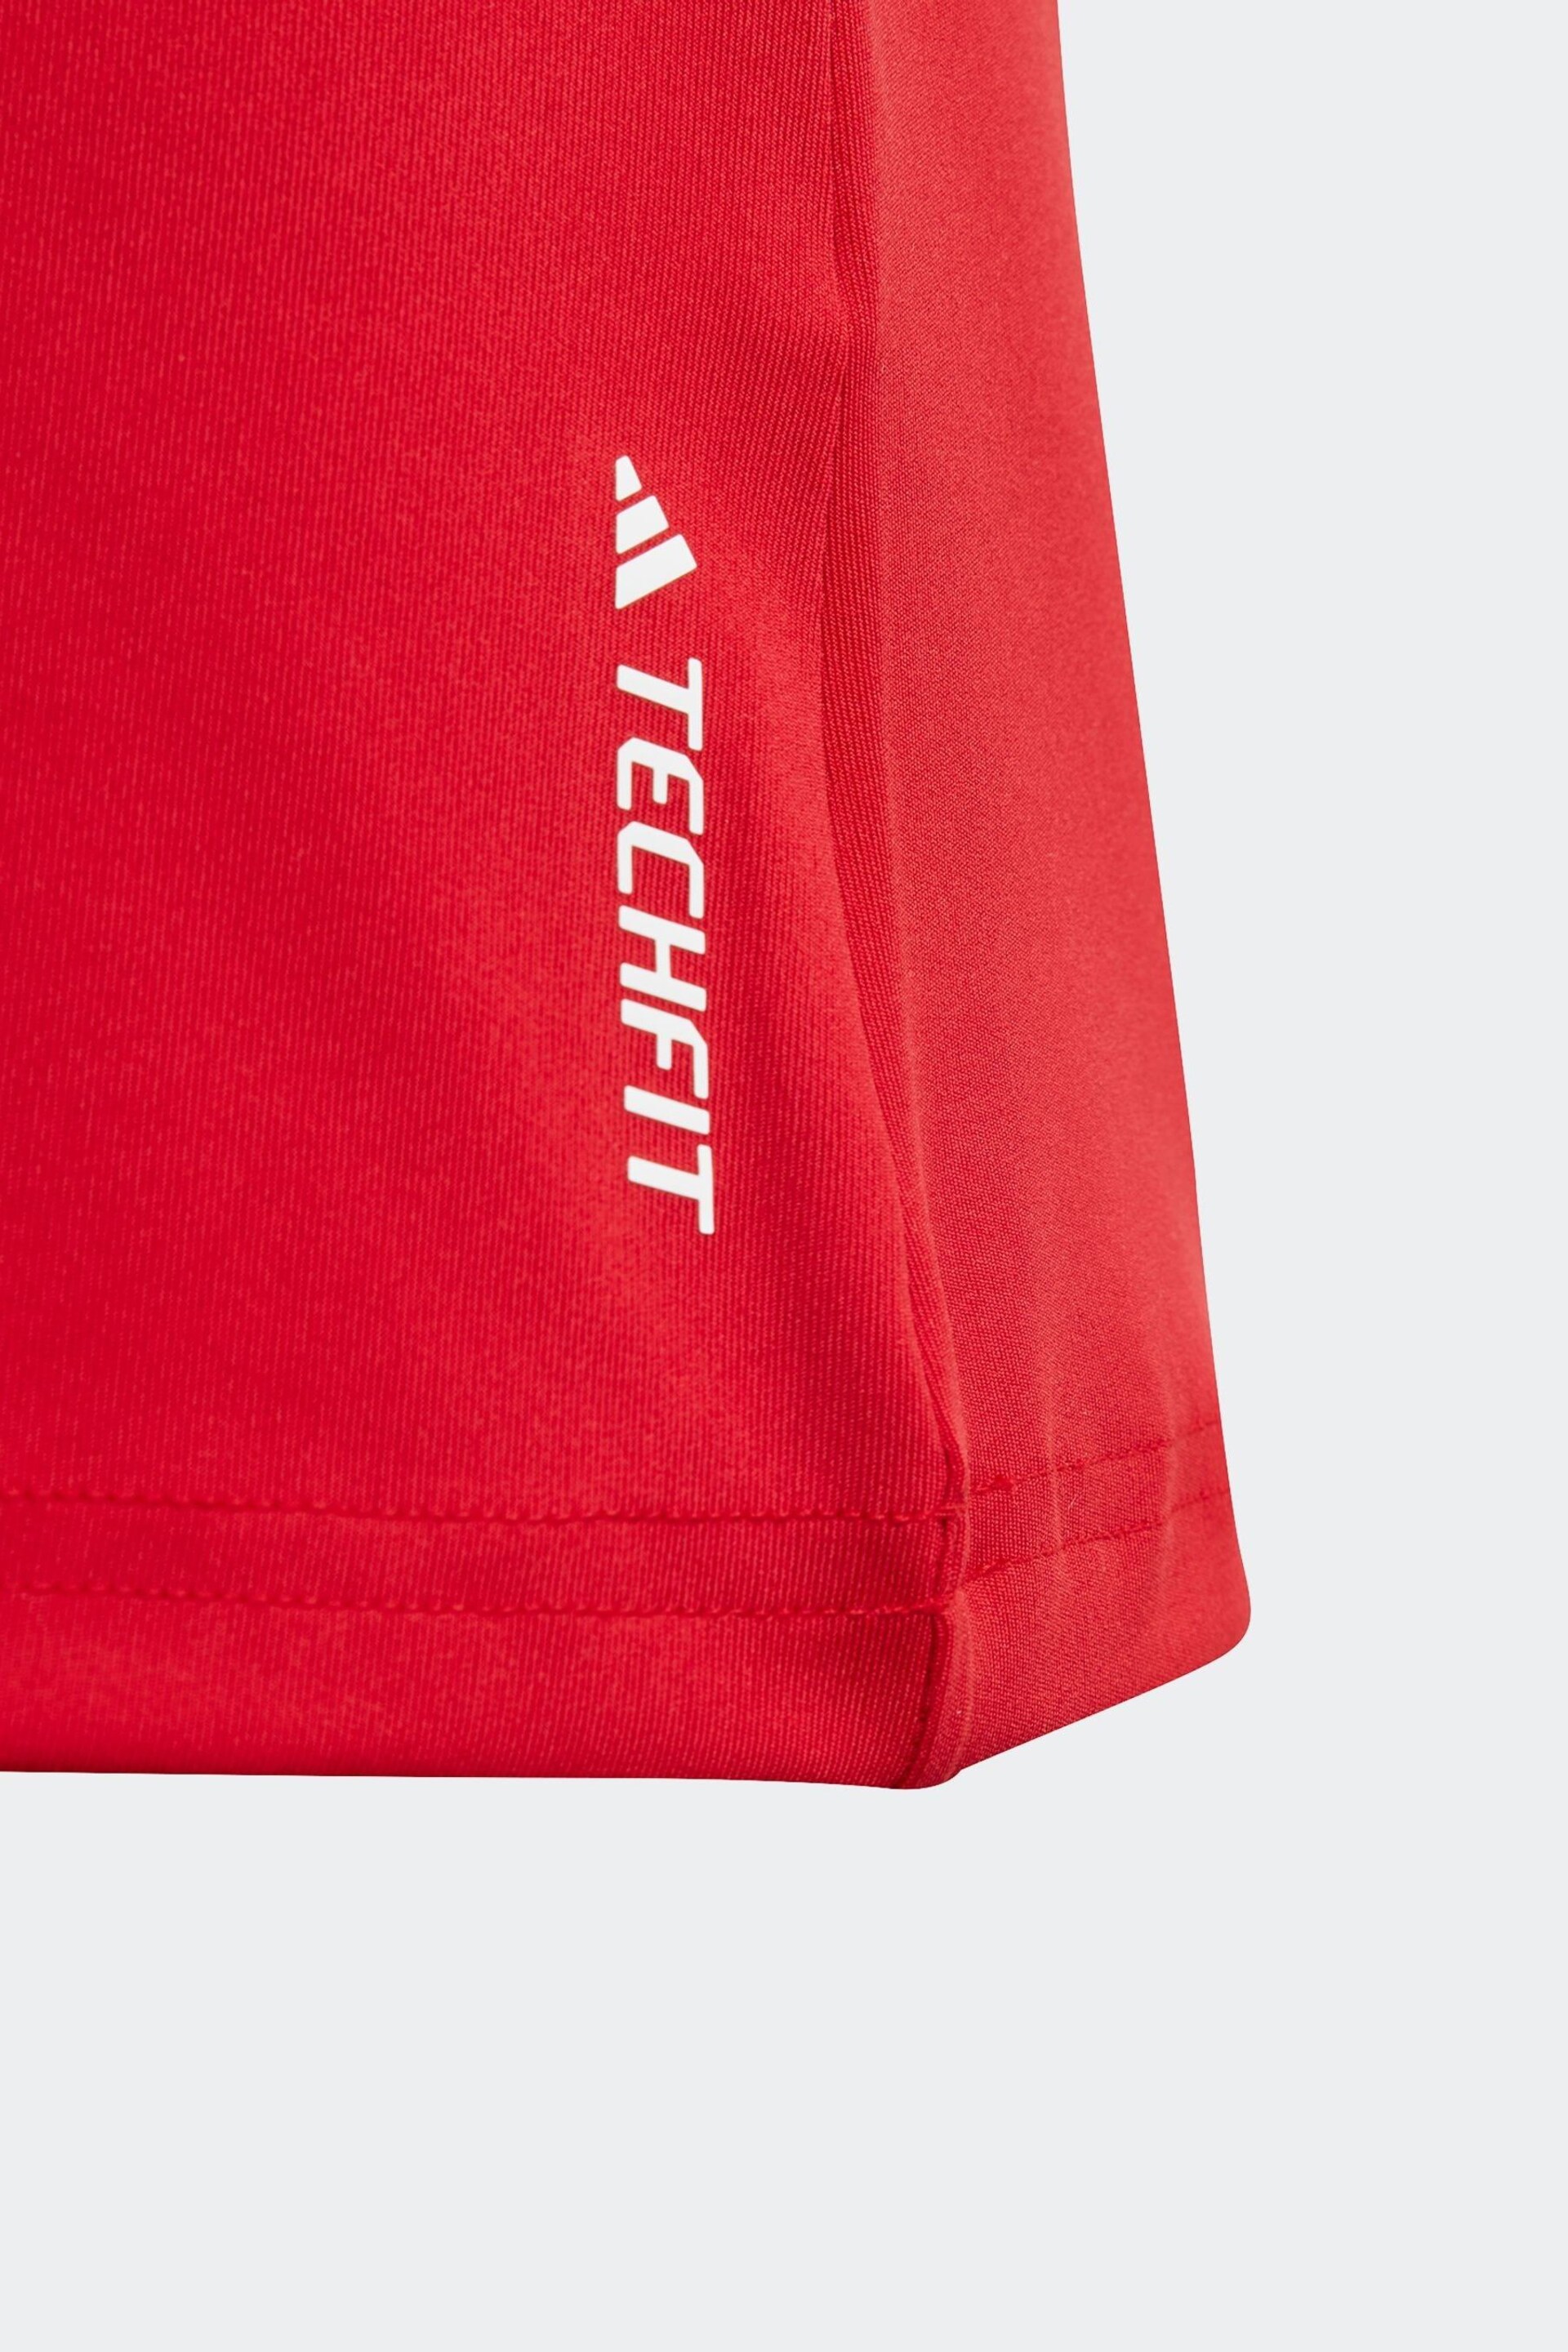 adidas Red Sportswear Aeroready Techfit Kids Tank Top - Image 5 of 5